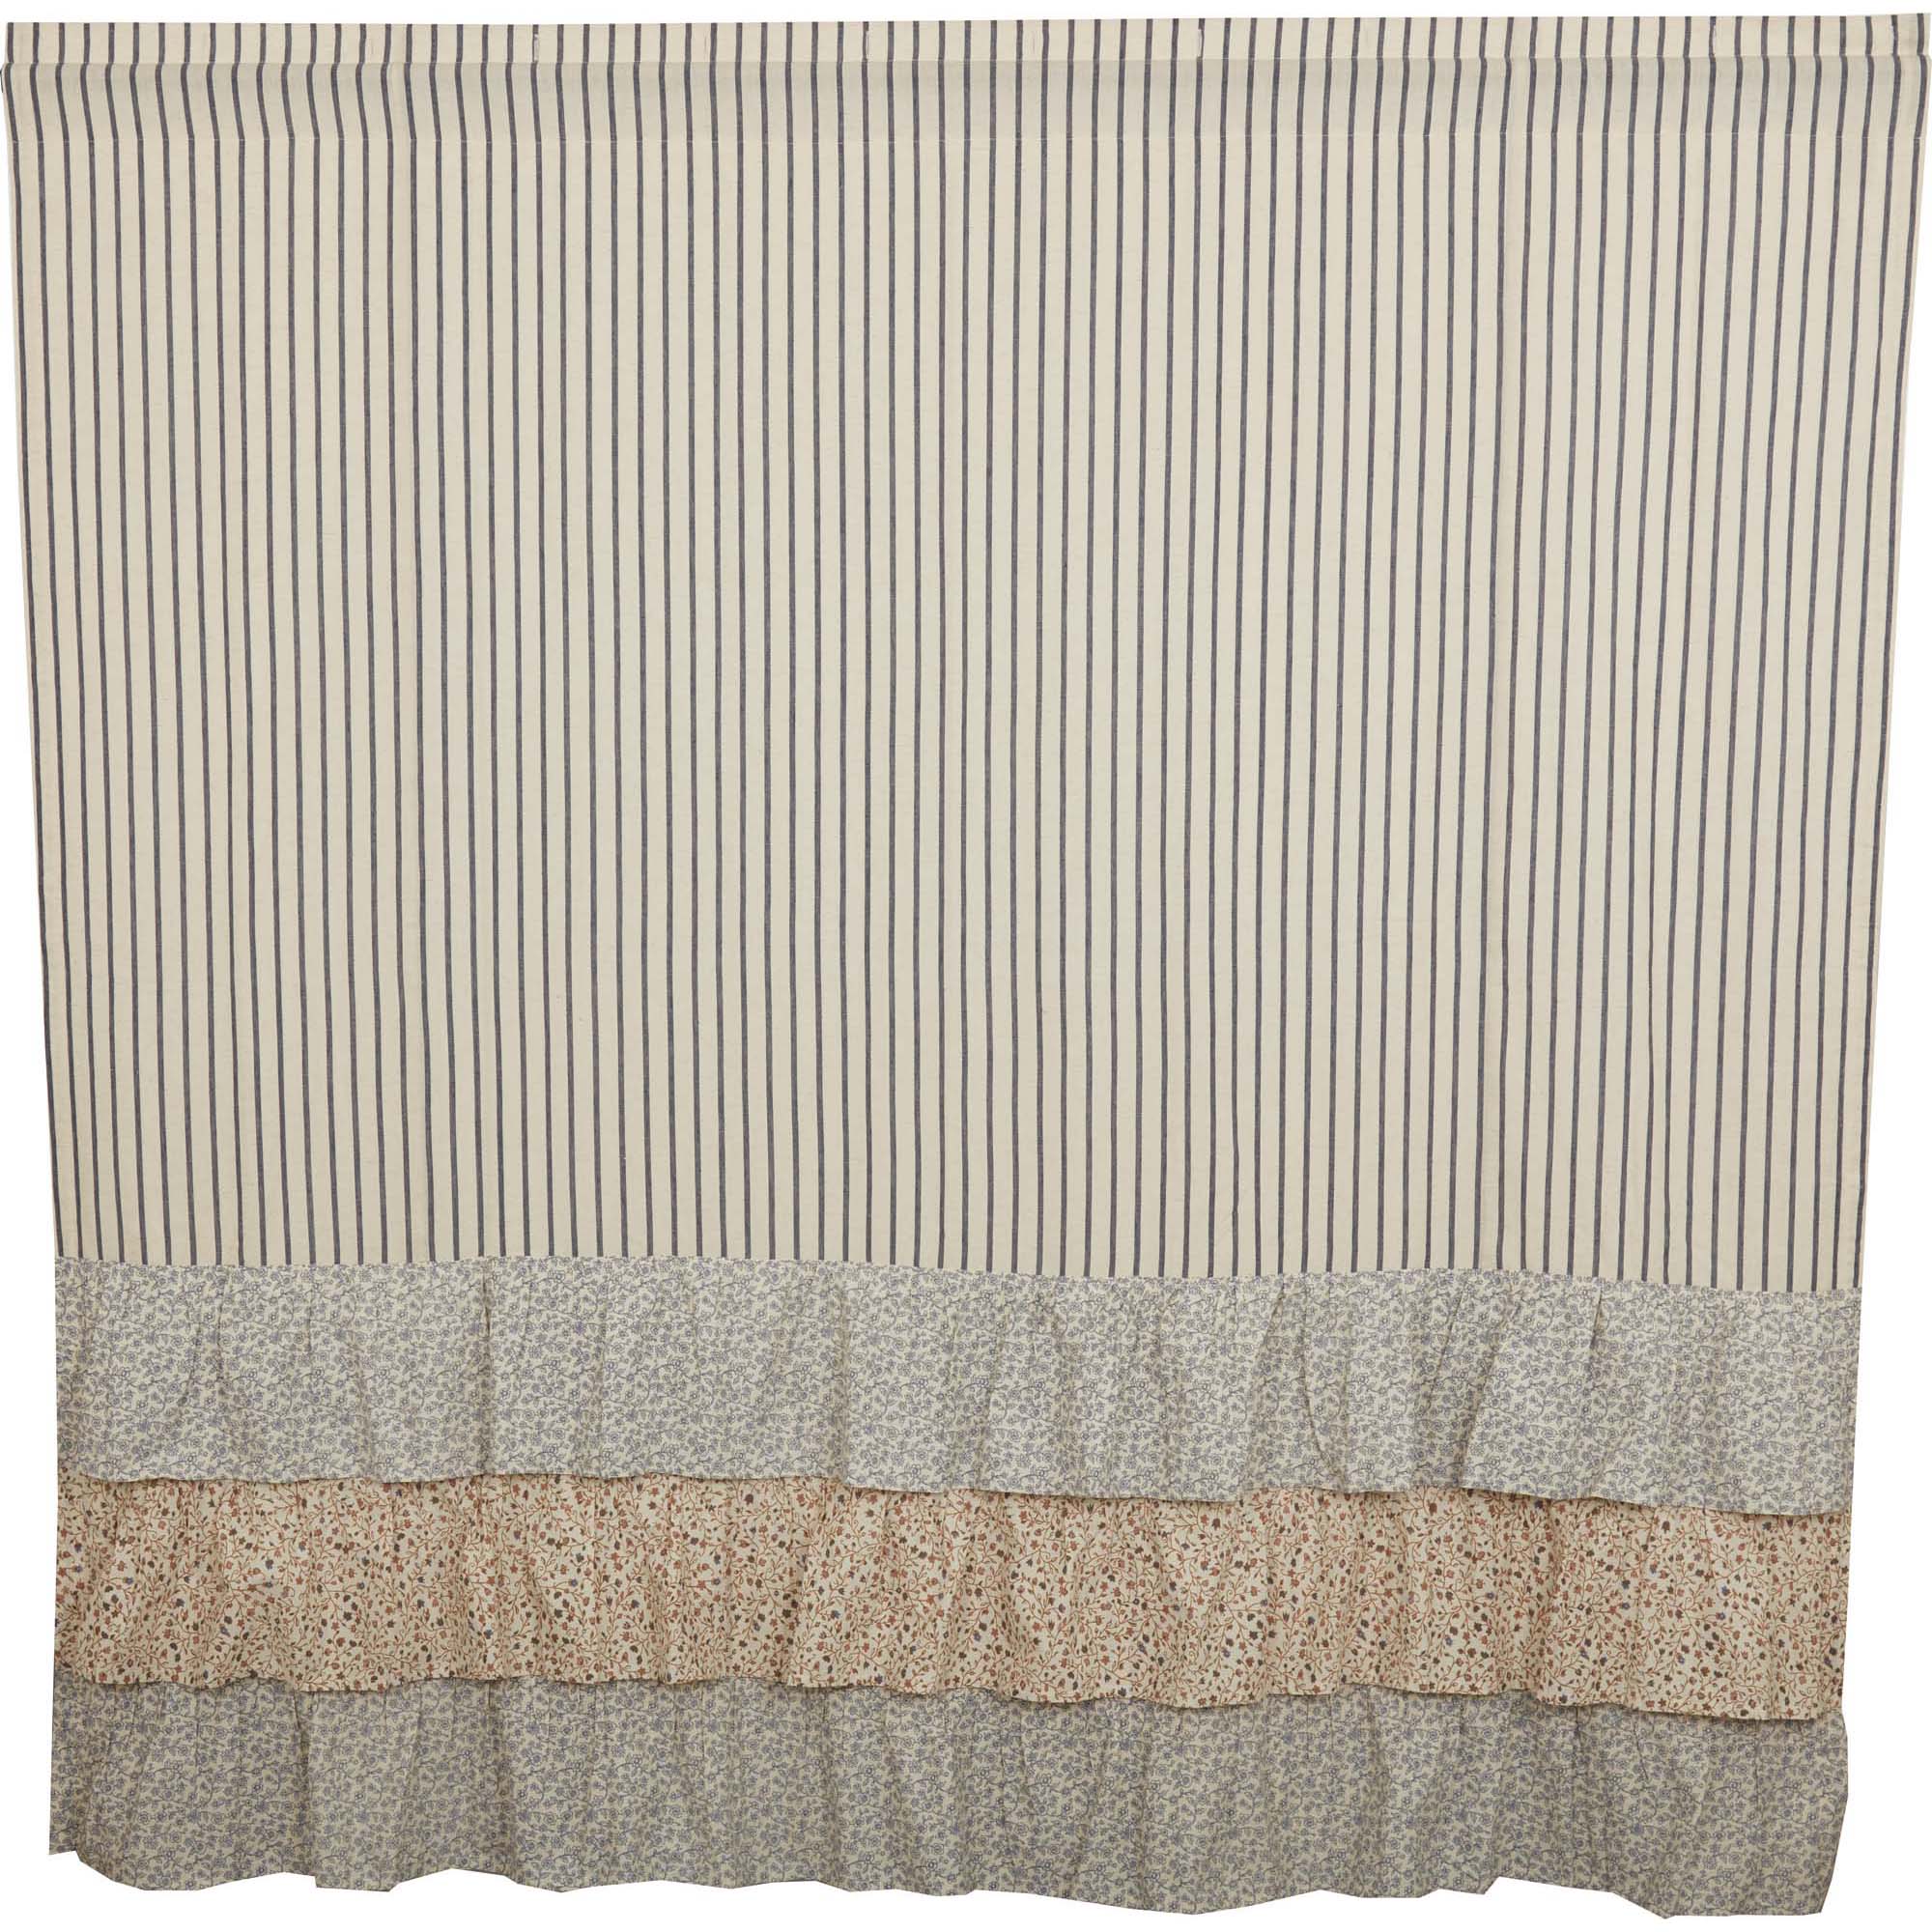 Kaila Ticking Stripe Ruffled Shower Curtain 72x72 VHC Brands